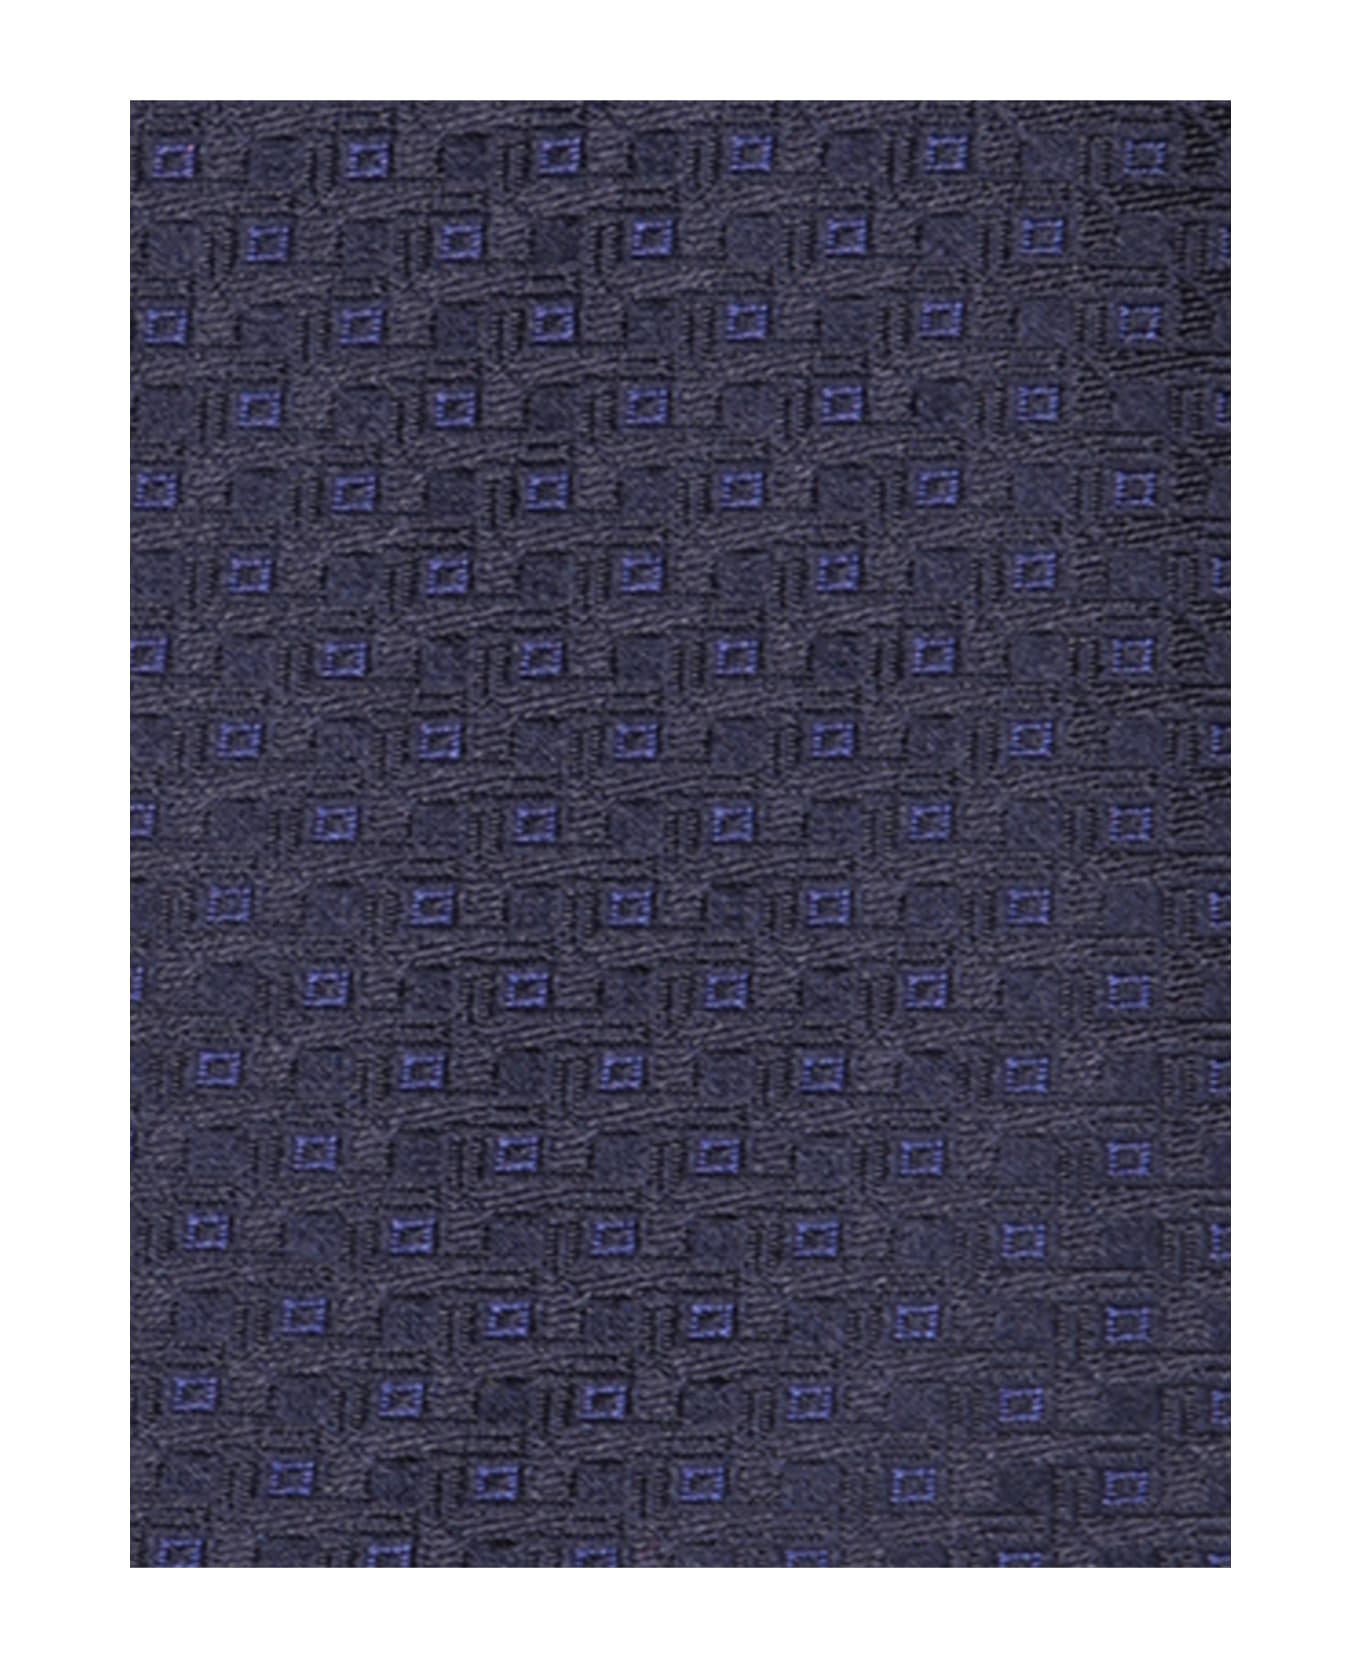 Canali Patterned Dark Blue Tie - Blue